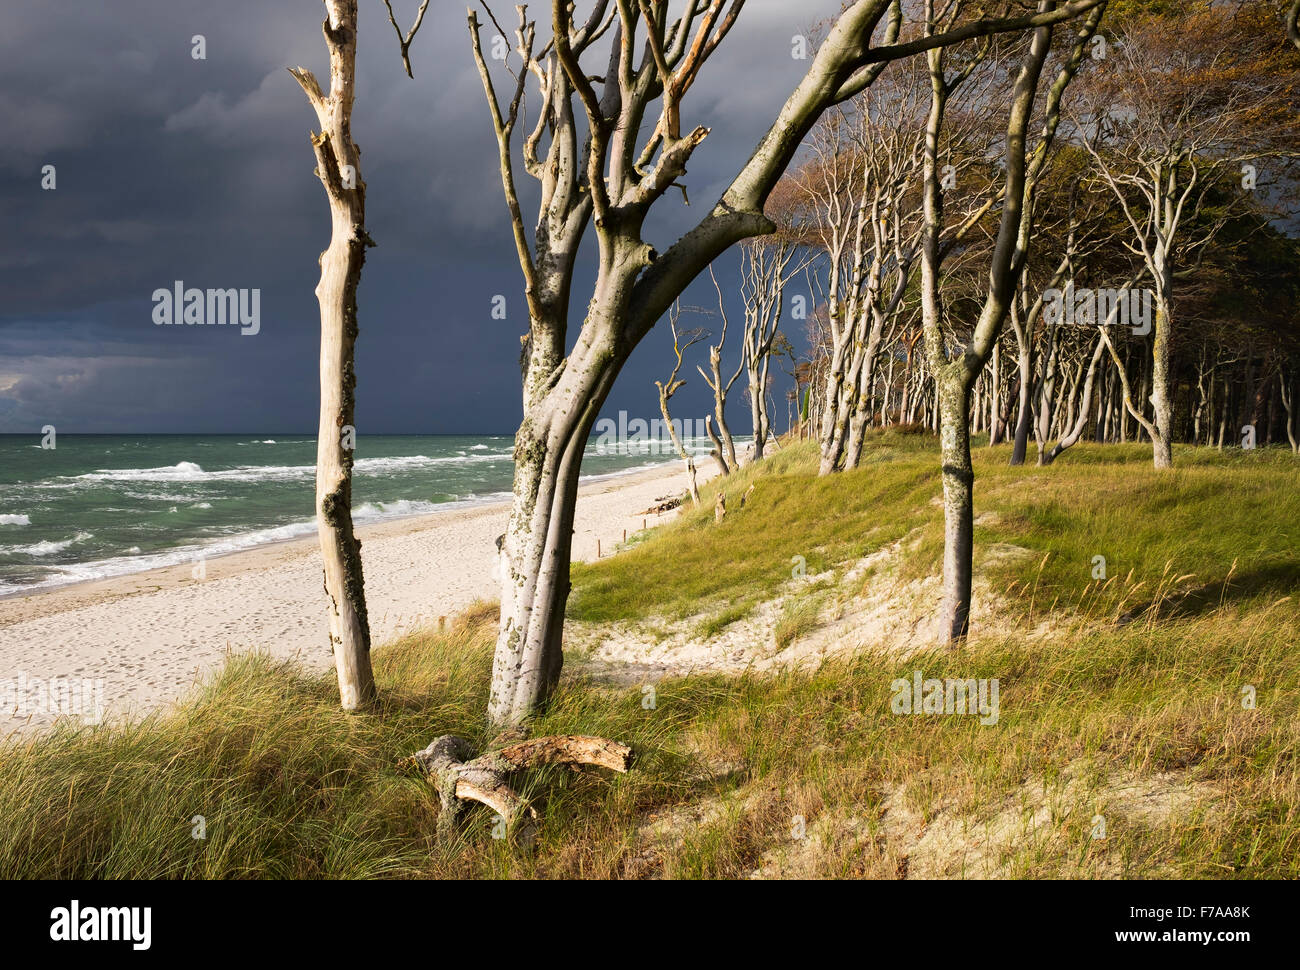 Le nuvole scure Weststrand Beach, Darß Forest dal Mar Baltico, nato am Darß, Fischland-Darß-Zingst, Western Pomerania Laguna Foto Stock